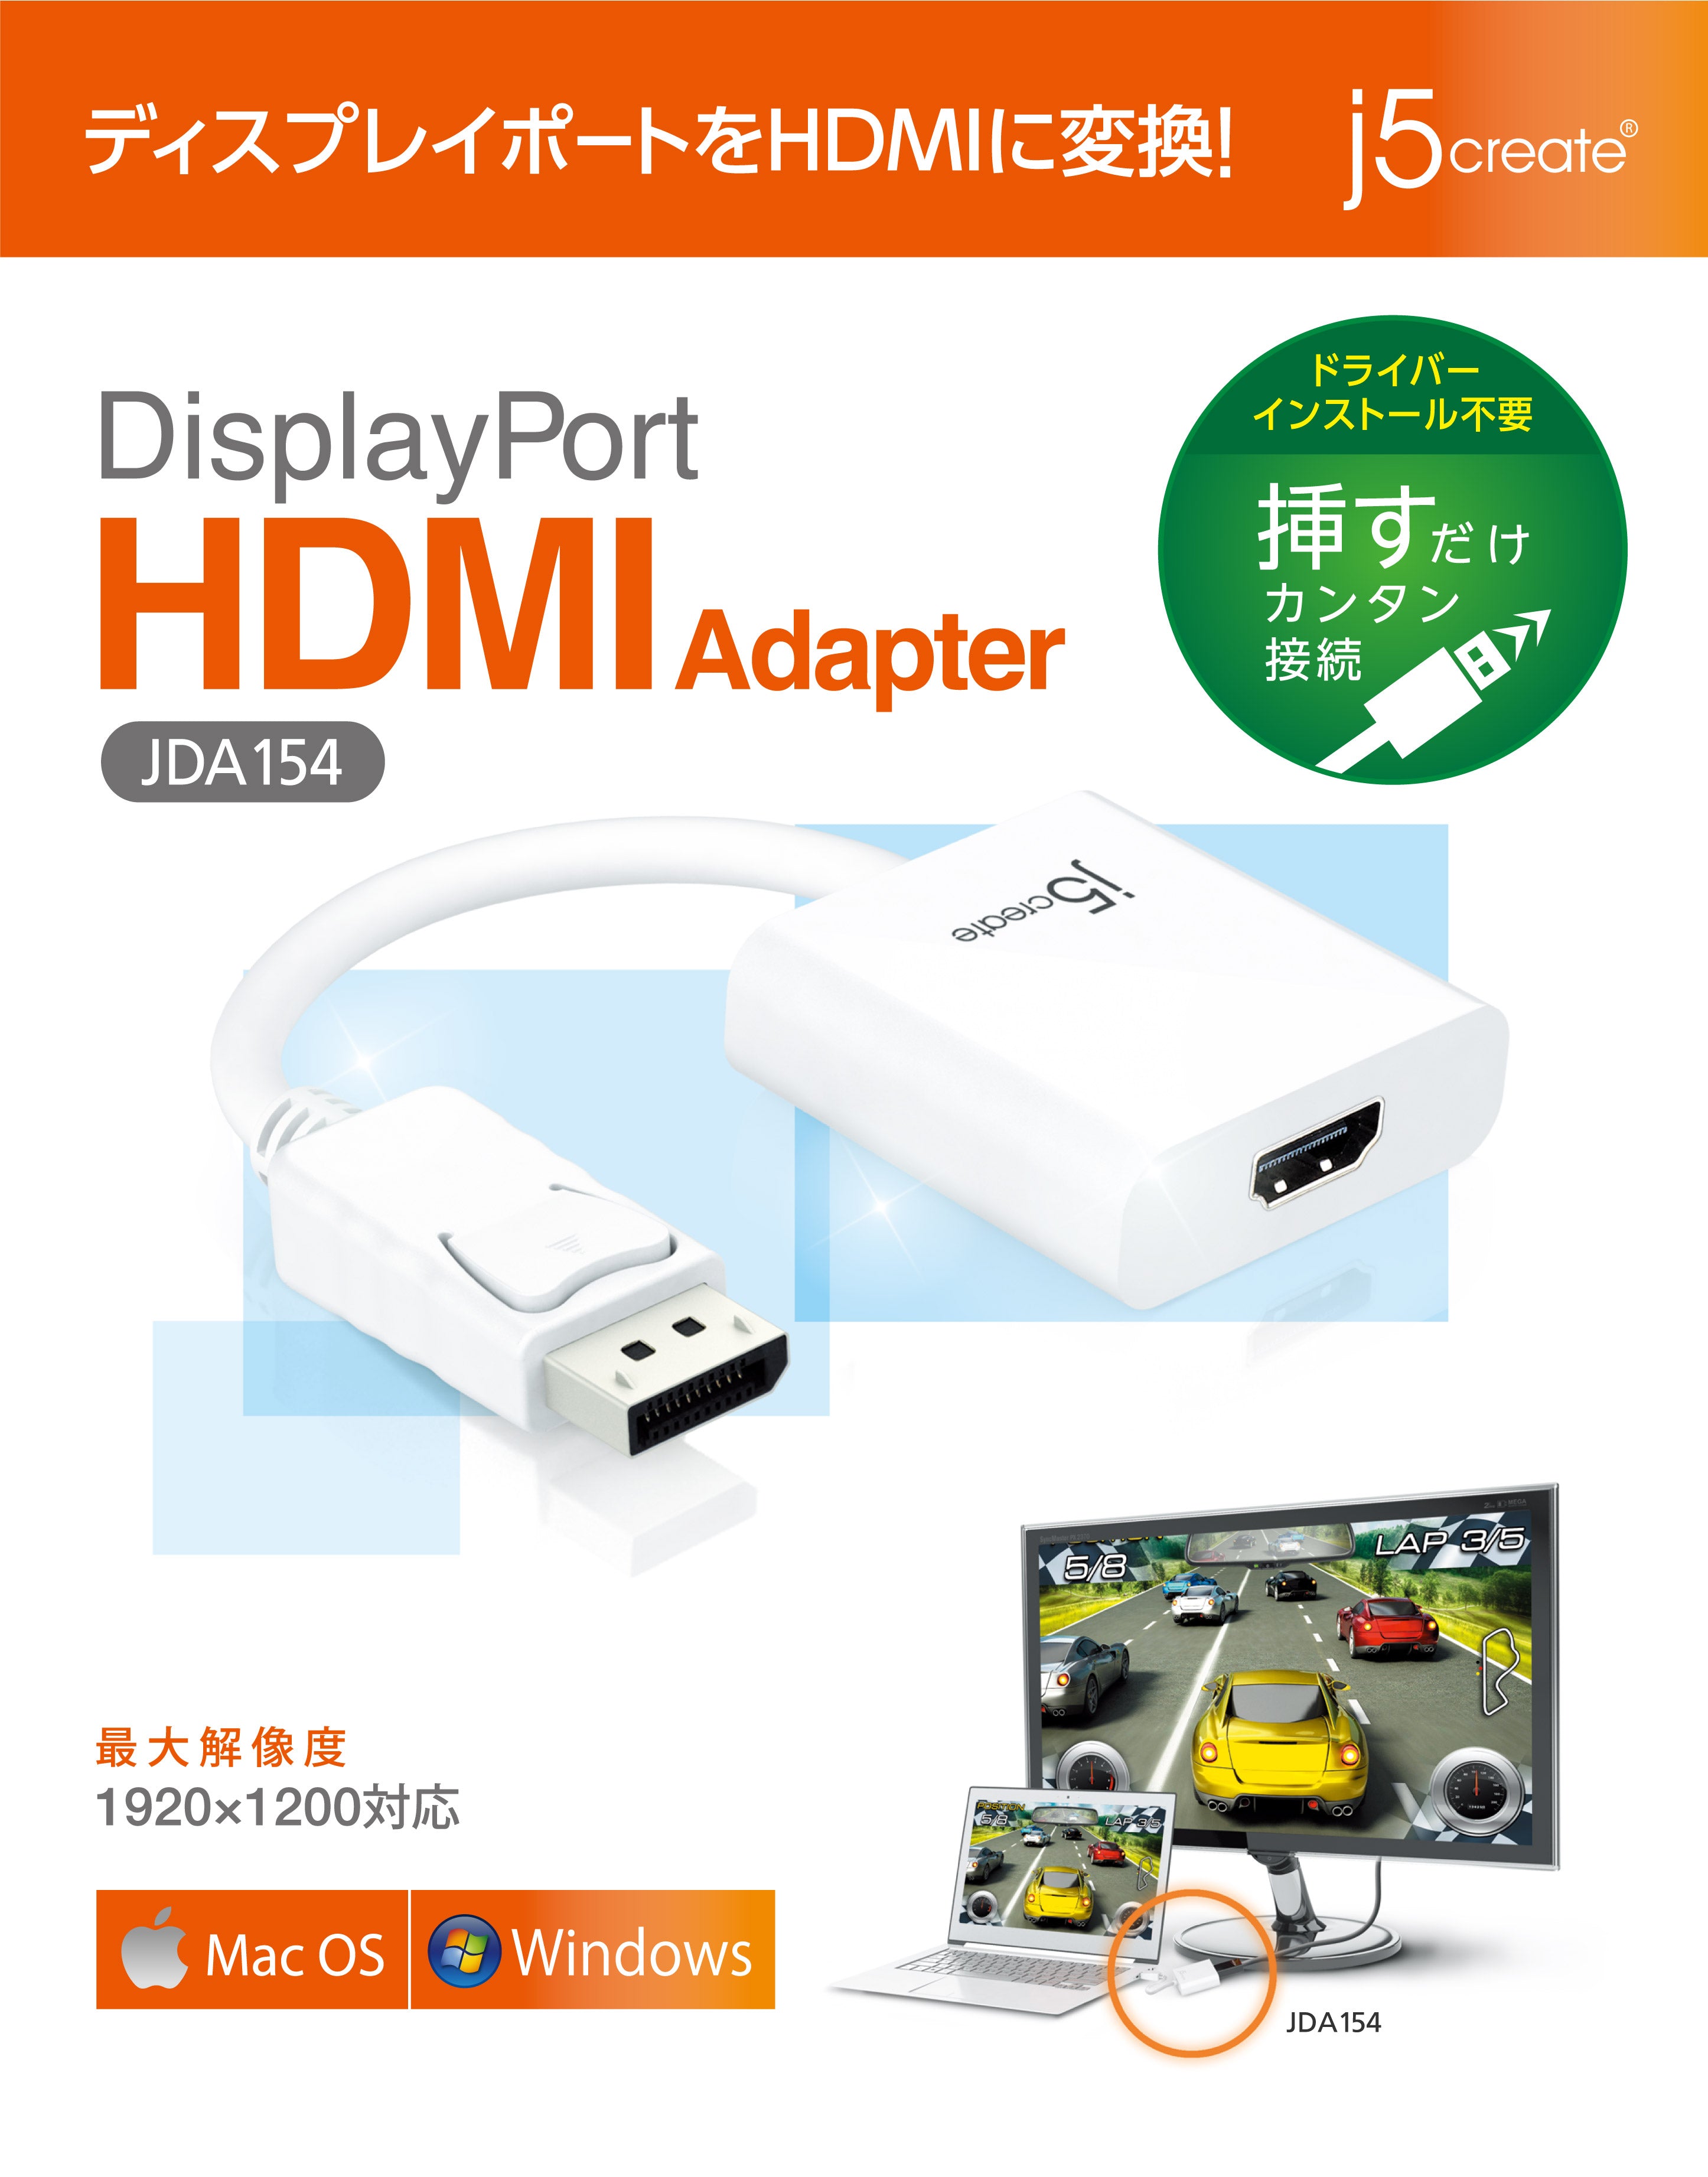 JDA154 DisplayPort to HDMIアダプター – new-jp-j5create